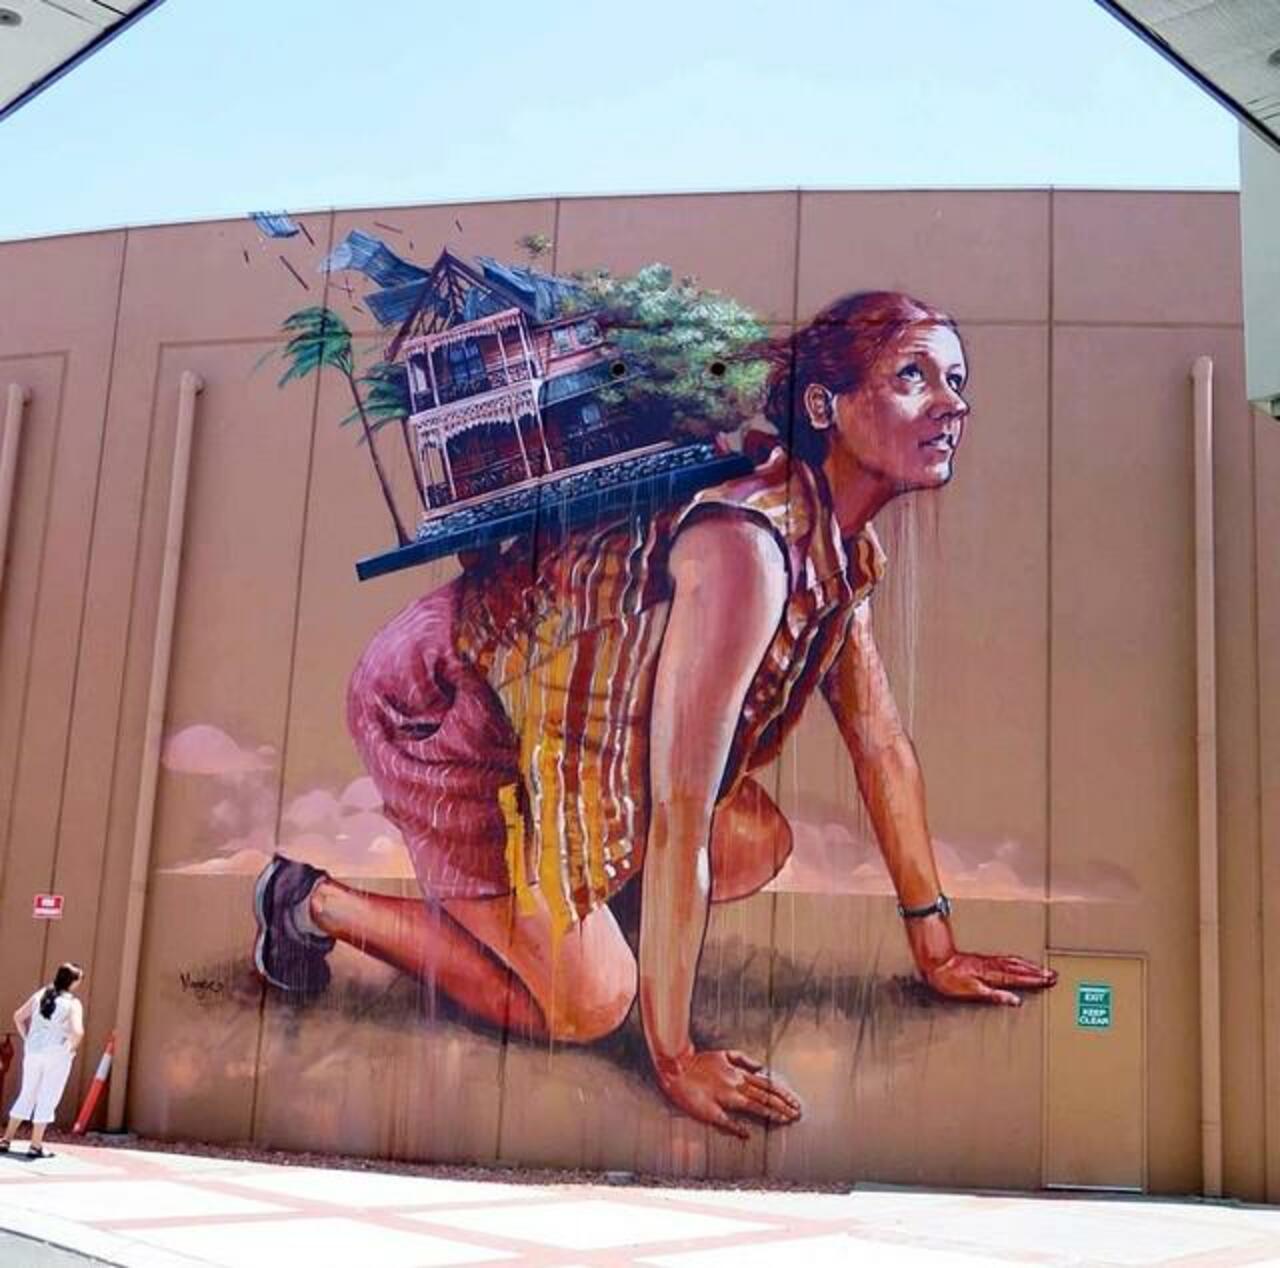 Latest Fintan Magee massive Street Art piece in Bunbury, Western Australia 

#art #graffiti #mural #streetart http://t.co/V7eRrO7Hc9